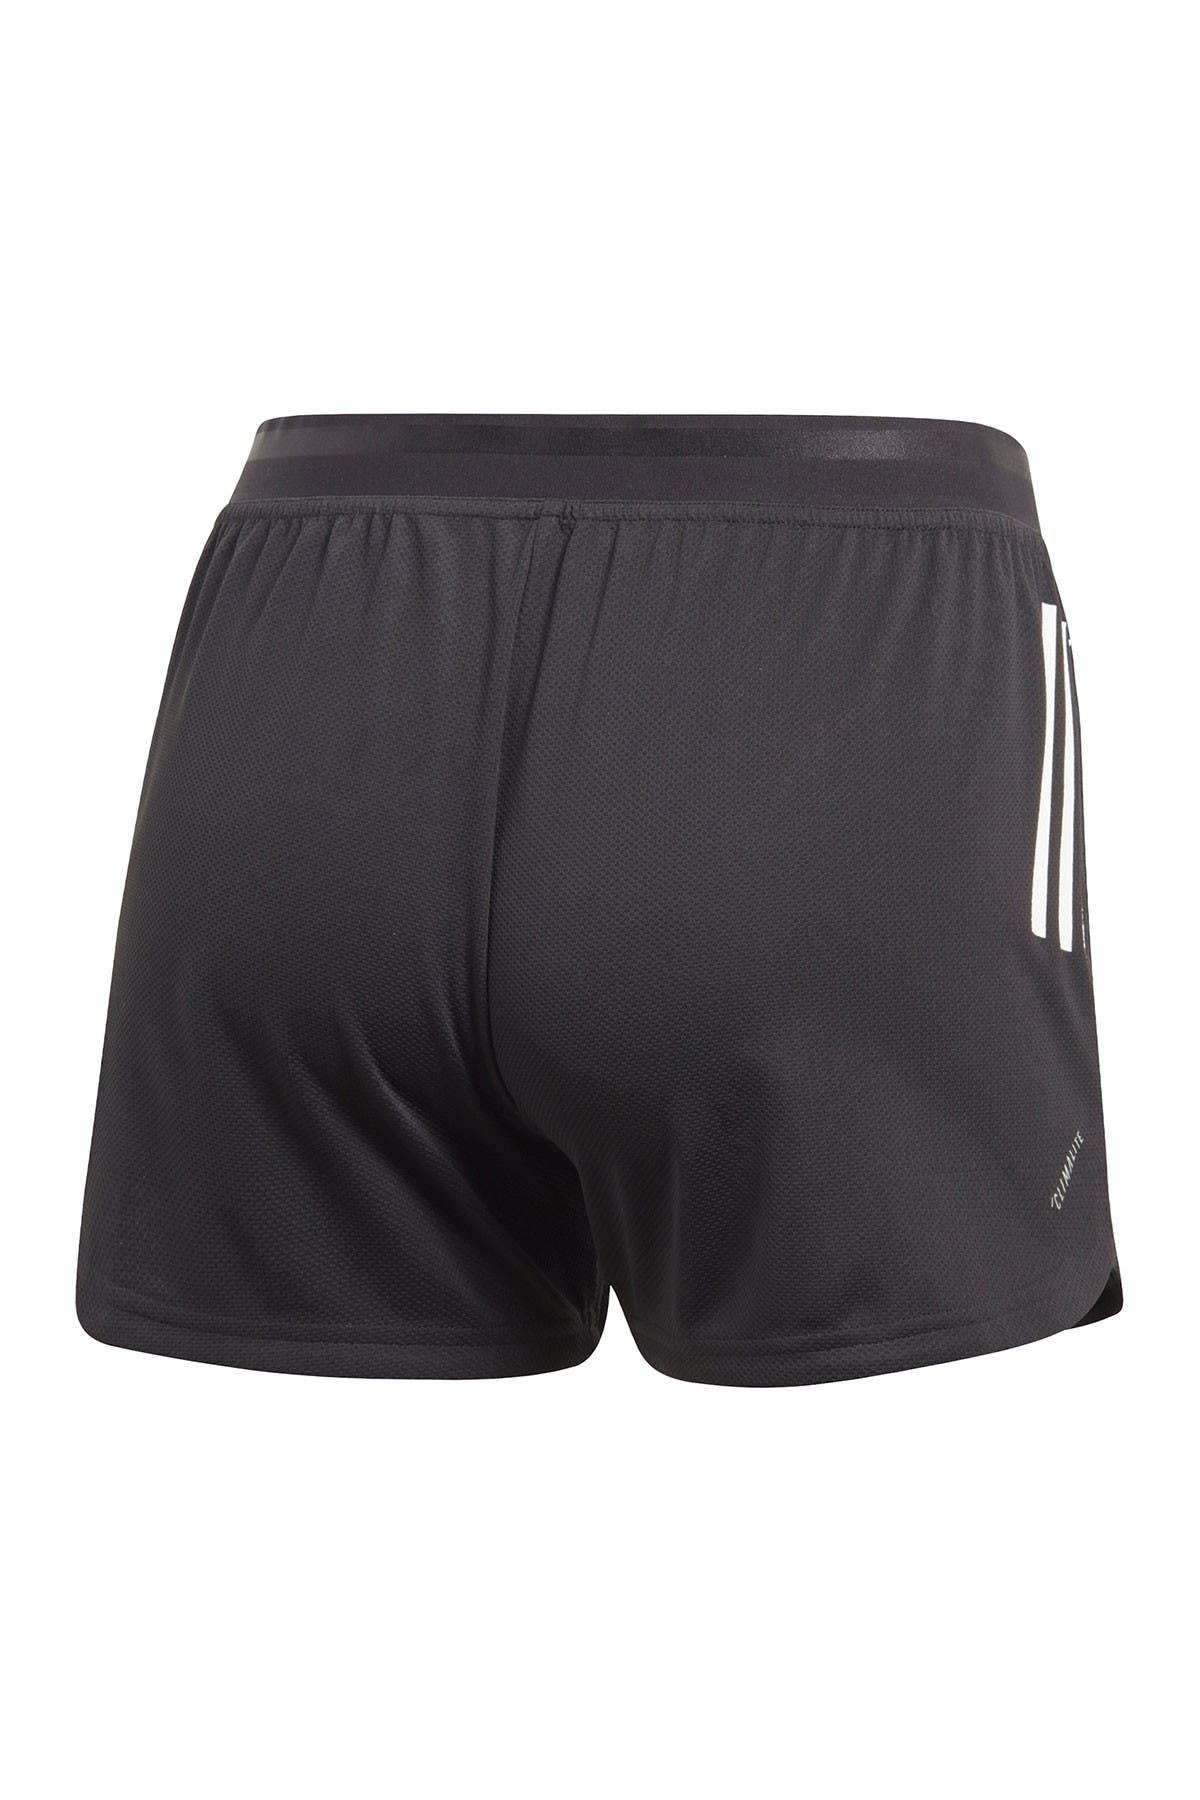 adidas 3 stripe climalite shorts